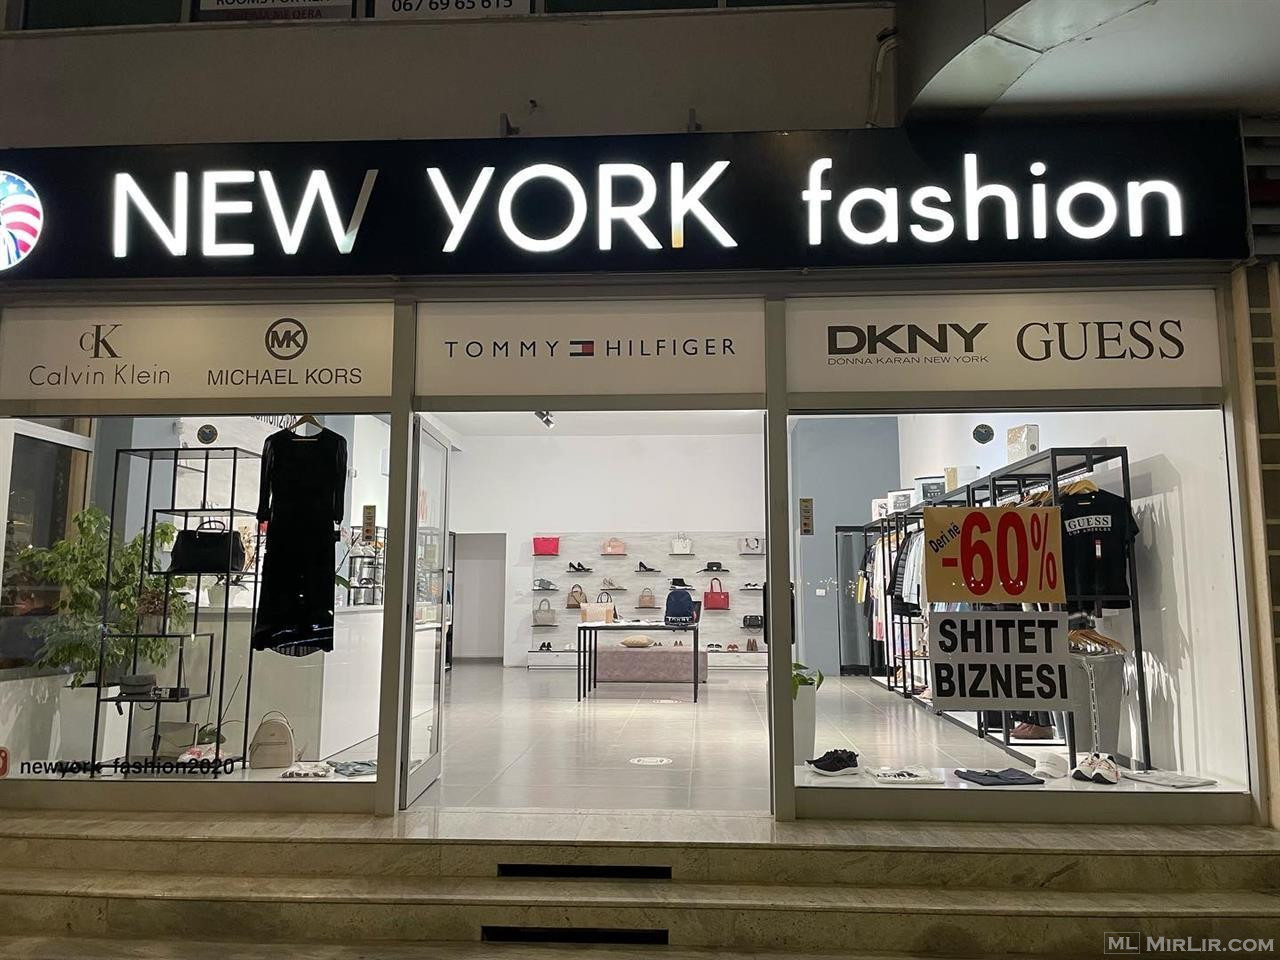 New York fashion (biznesi per shitje)